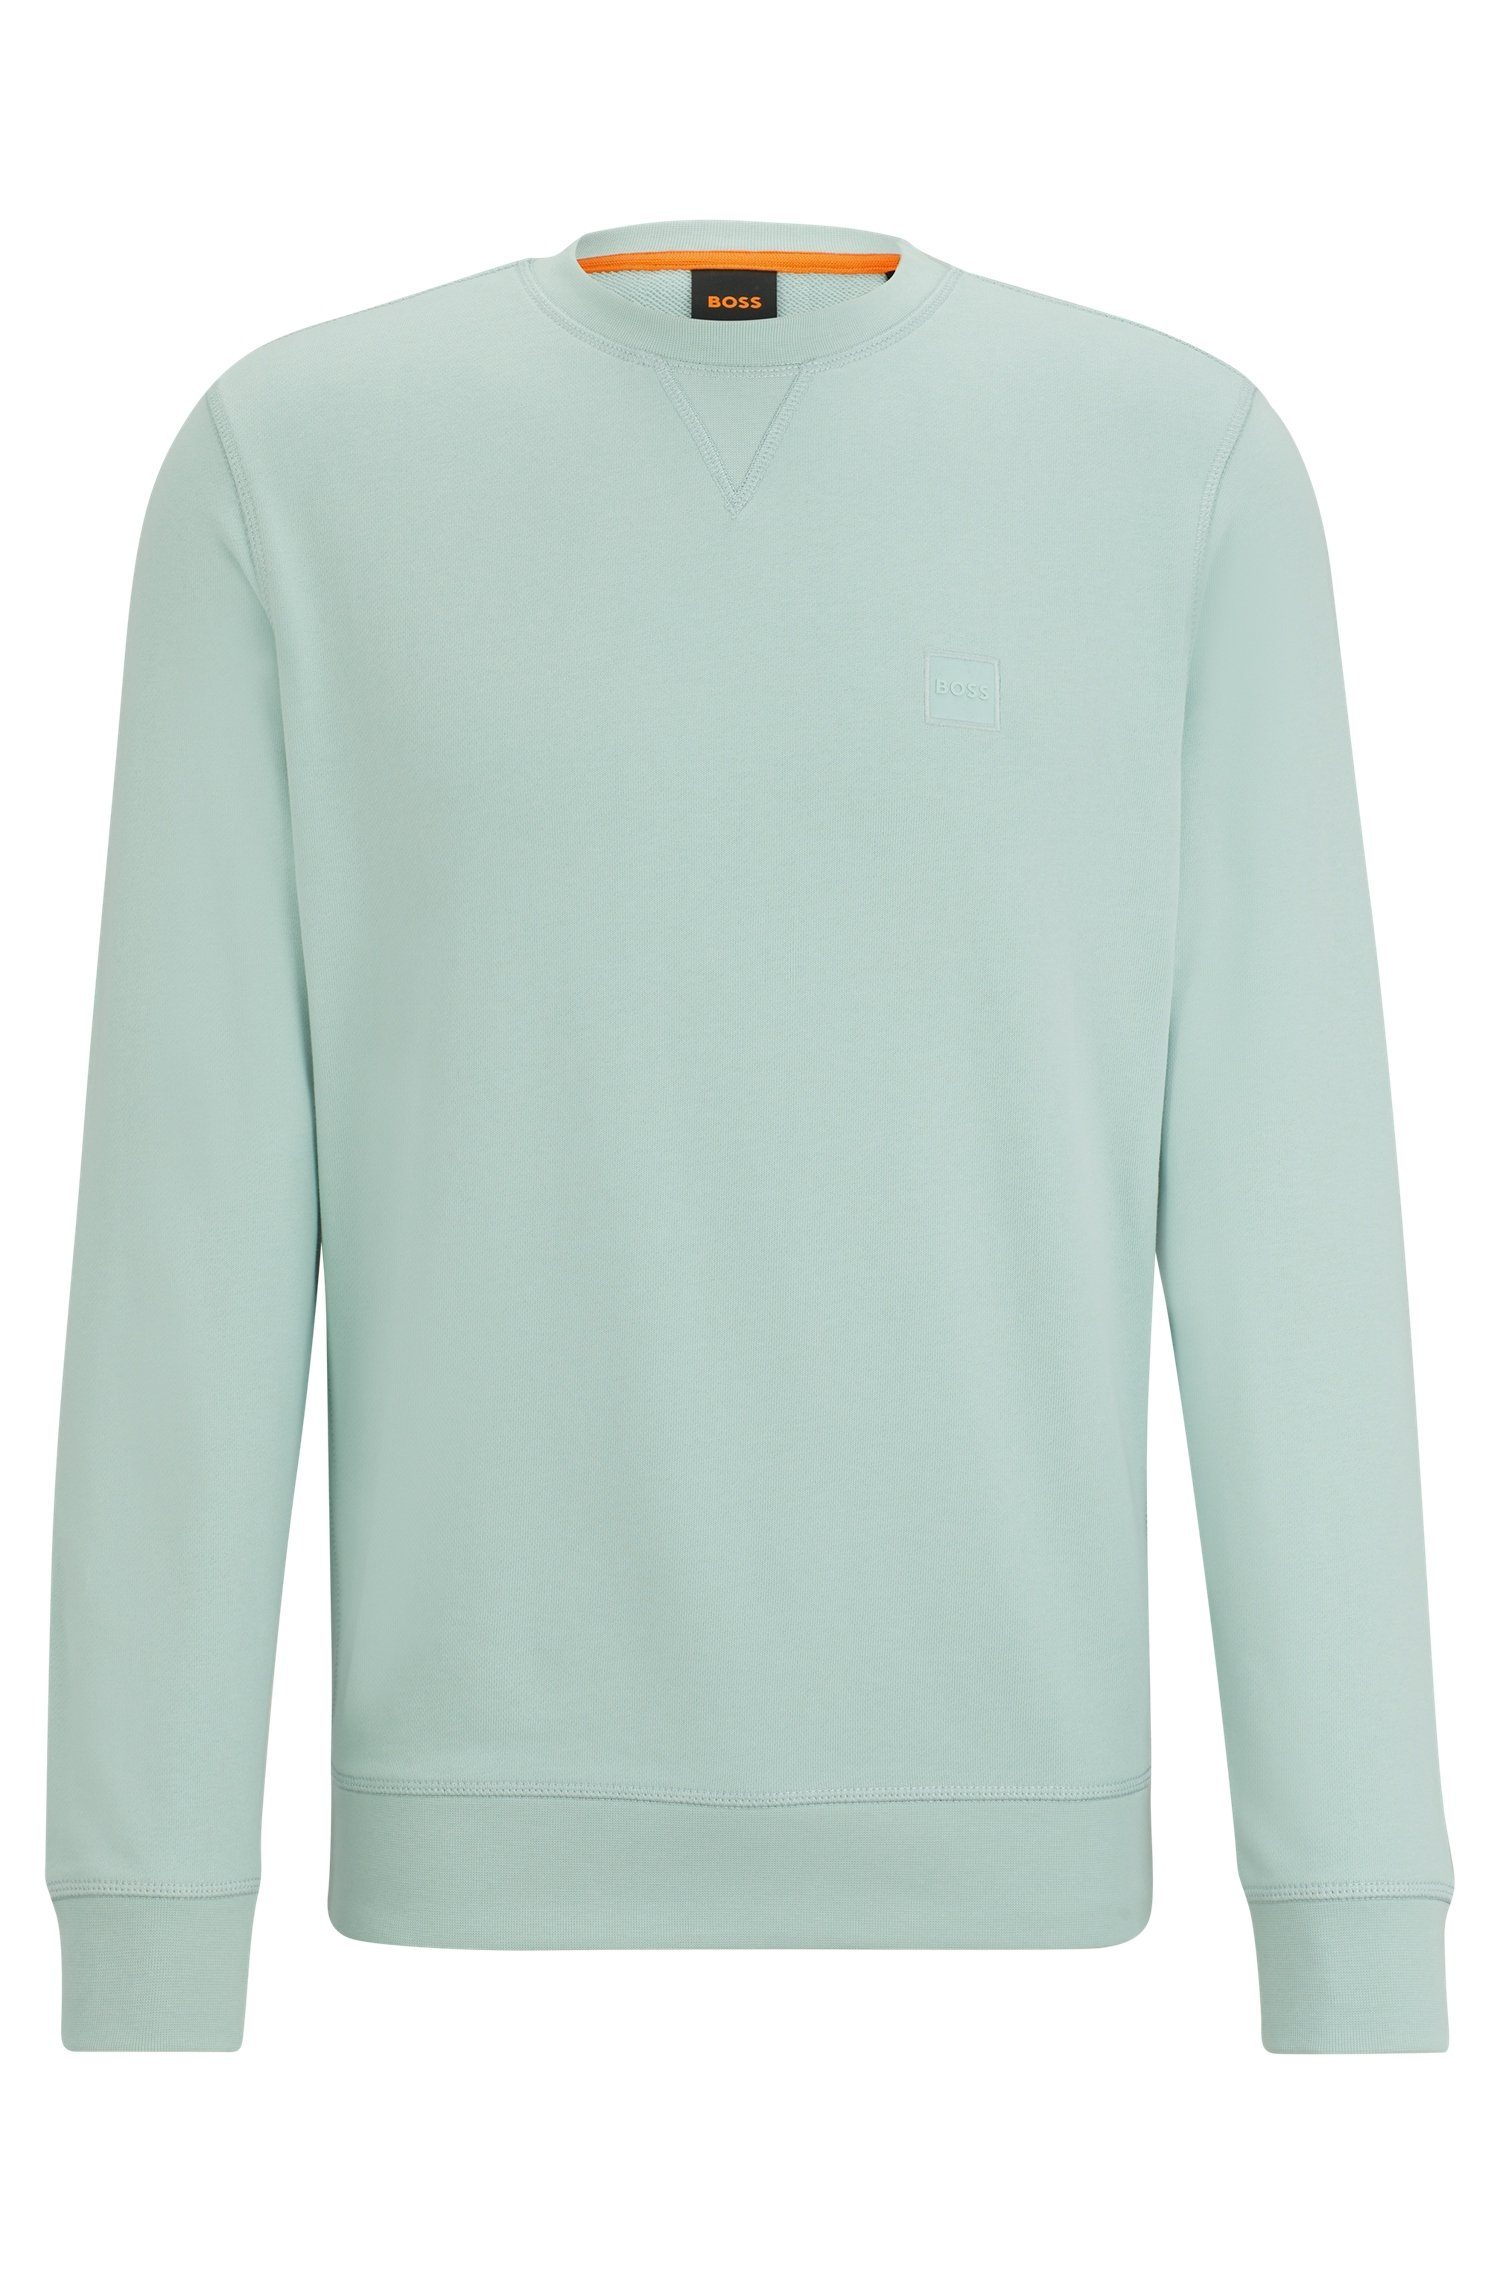 BOSS ORANGE Sweatshirt Westart hoher Tragekomfort 446 Turquoise/Aqua